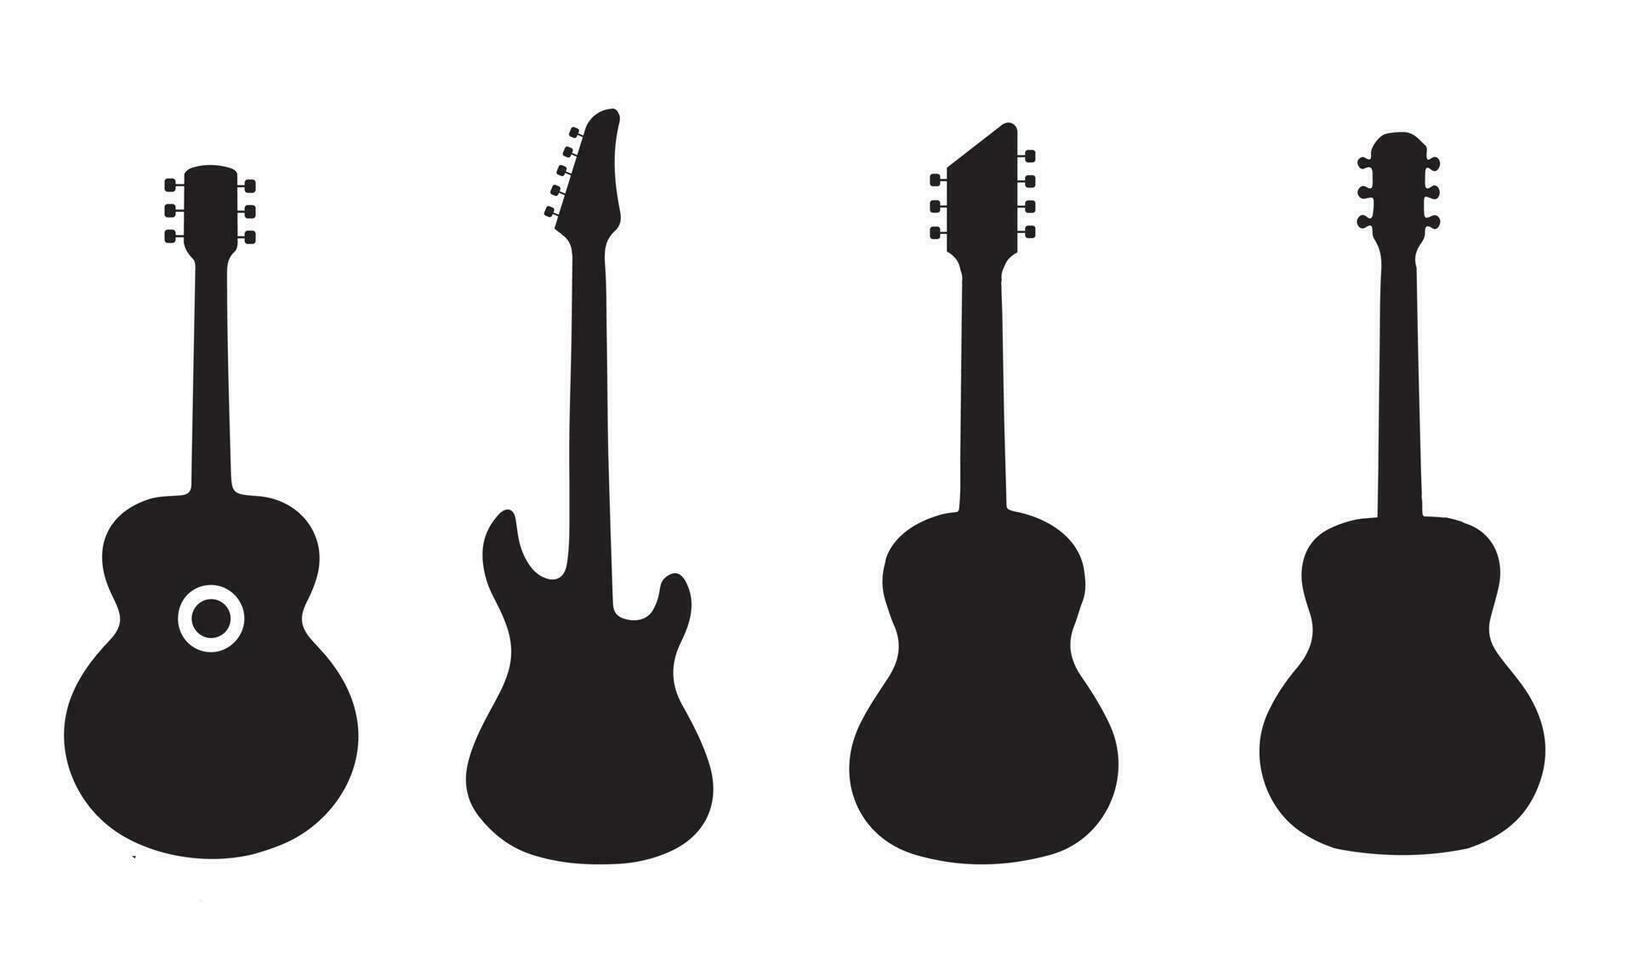 Electric Guitar Black On White Background Silhouette Vector illustration Design